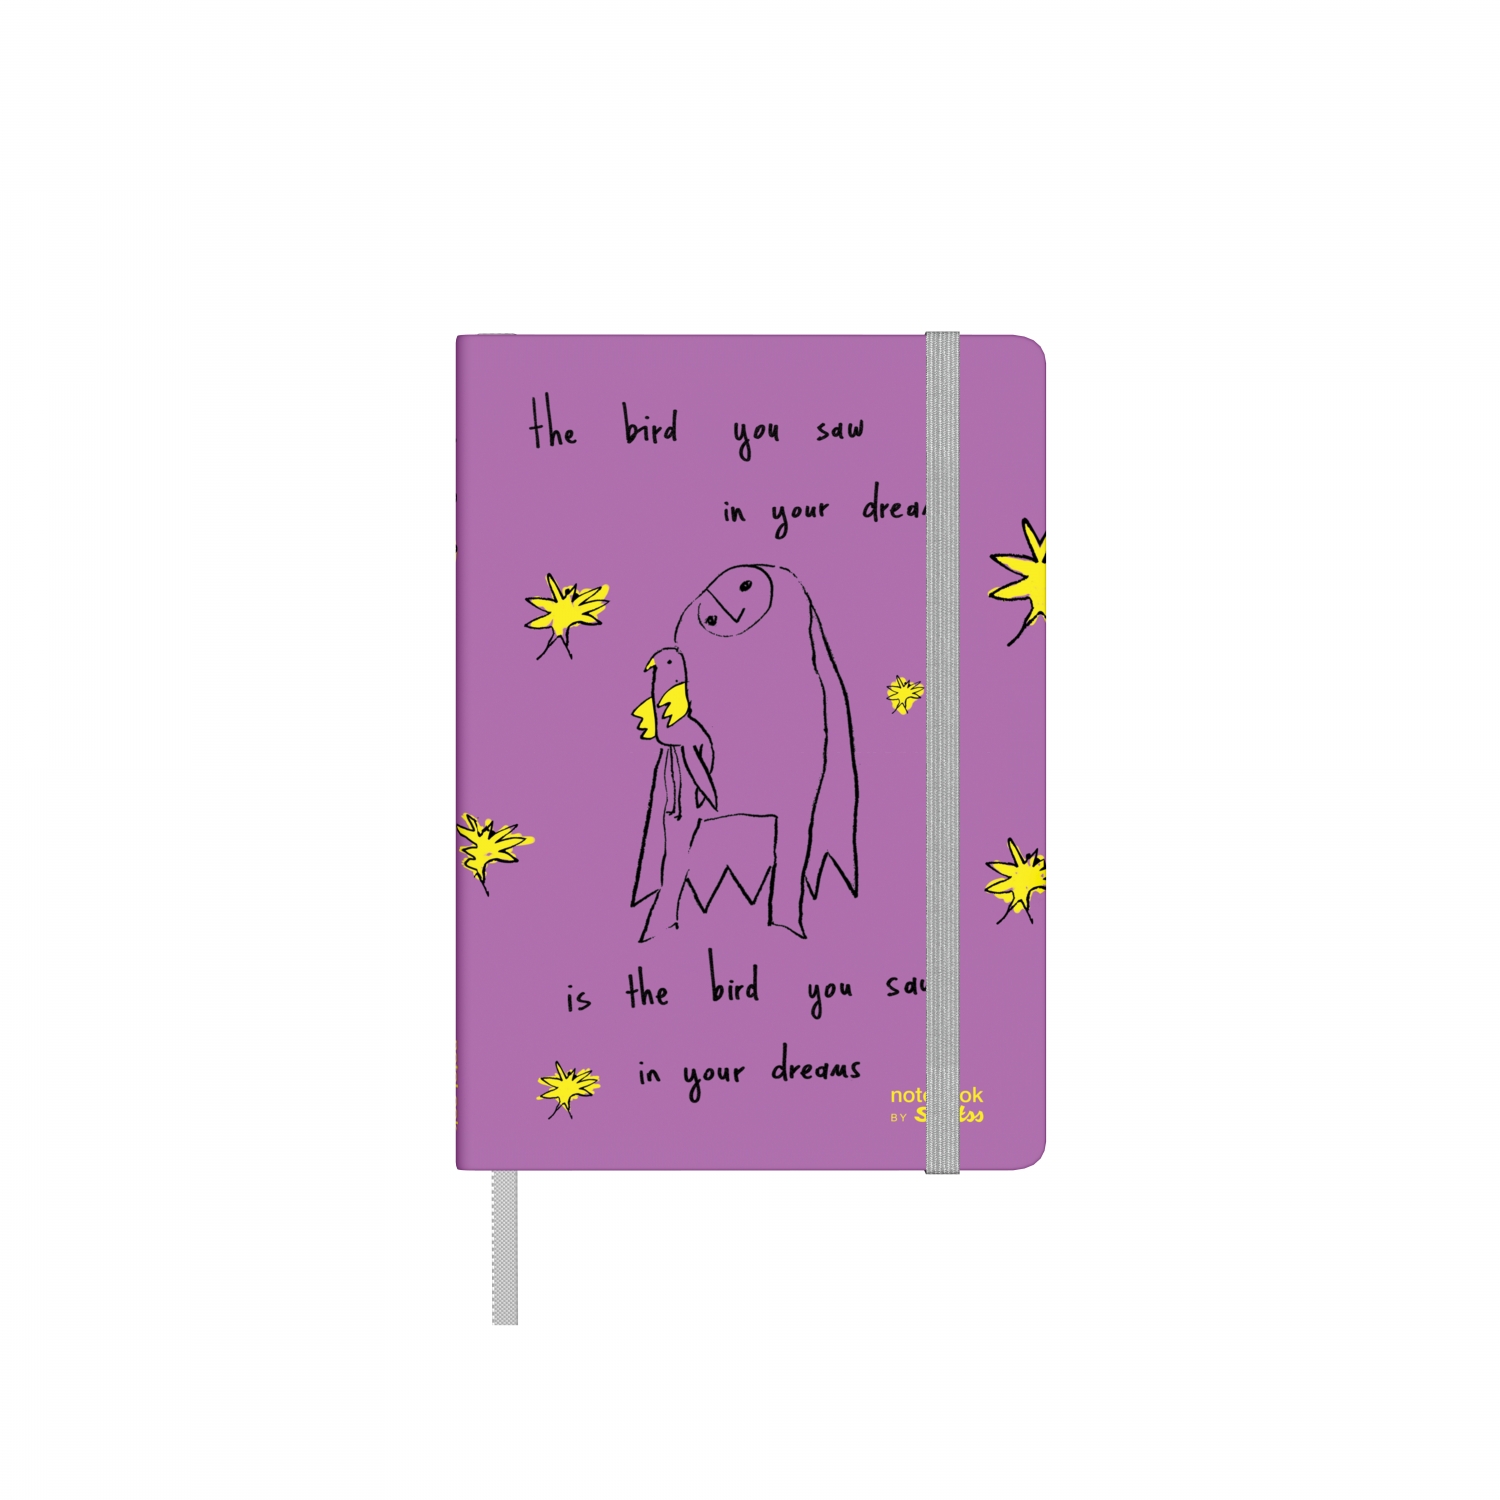 Бележник Scrikss Notelook Notebook Animal Purple,  модел 82512, Животни в Лилаво райе, A6